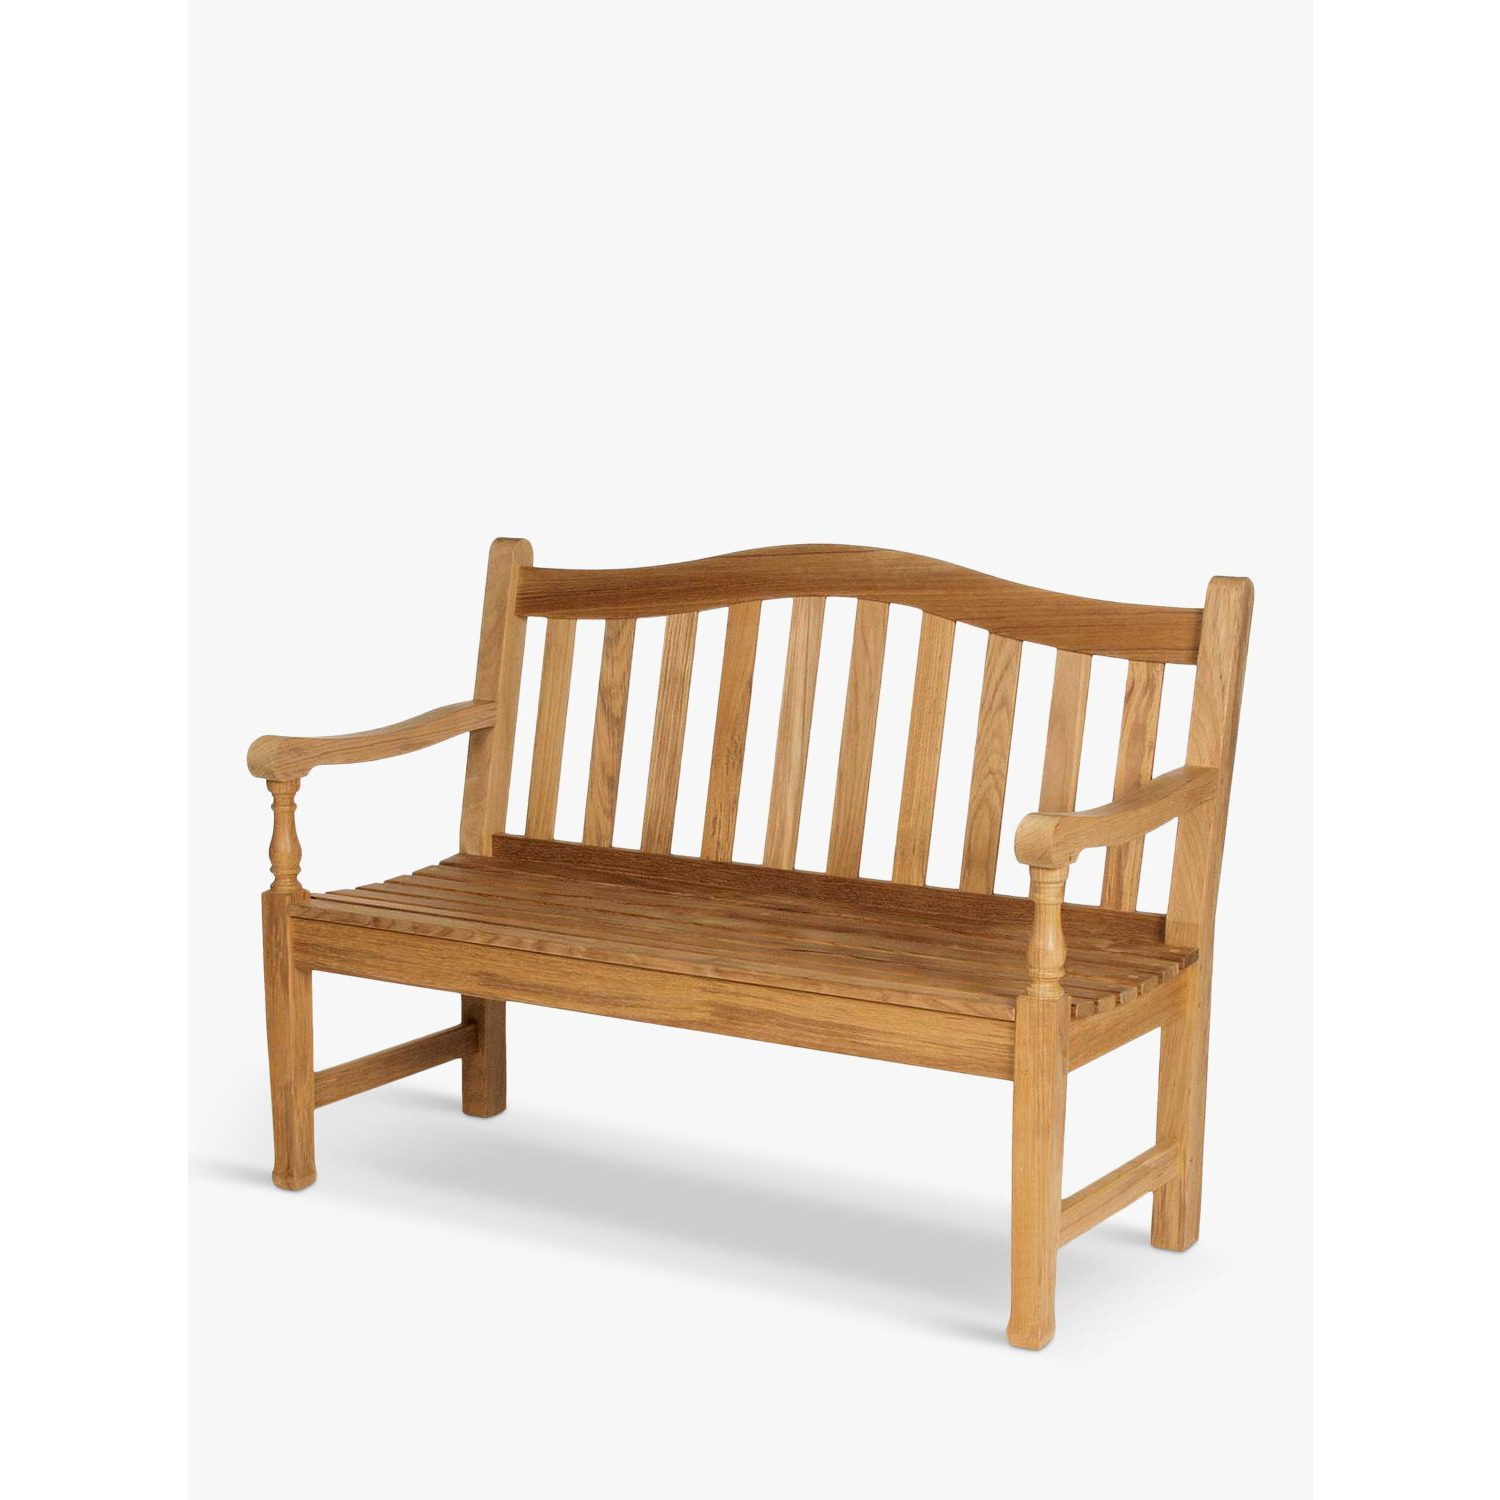 Barlow Tyrie Waveney 2-Seat Teak Wood Garden Bench, Natural - image 1